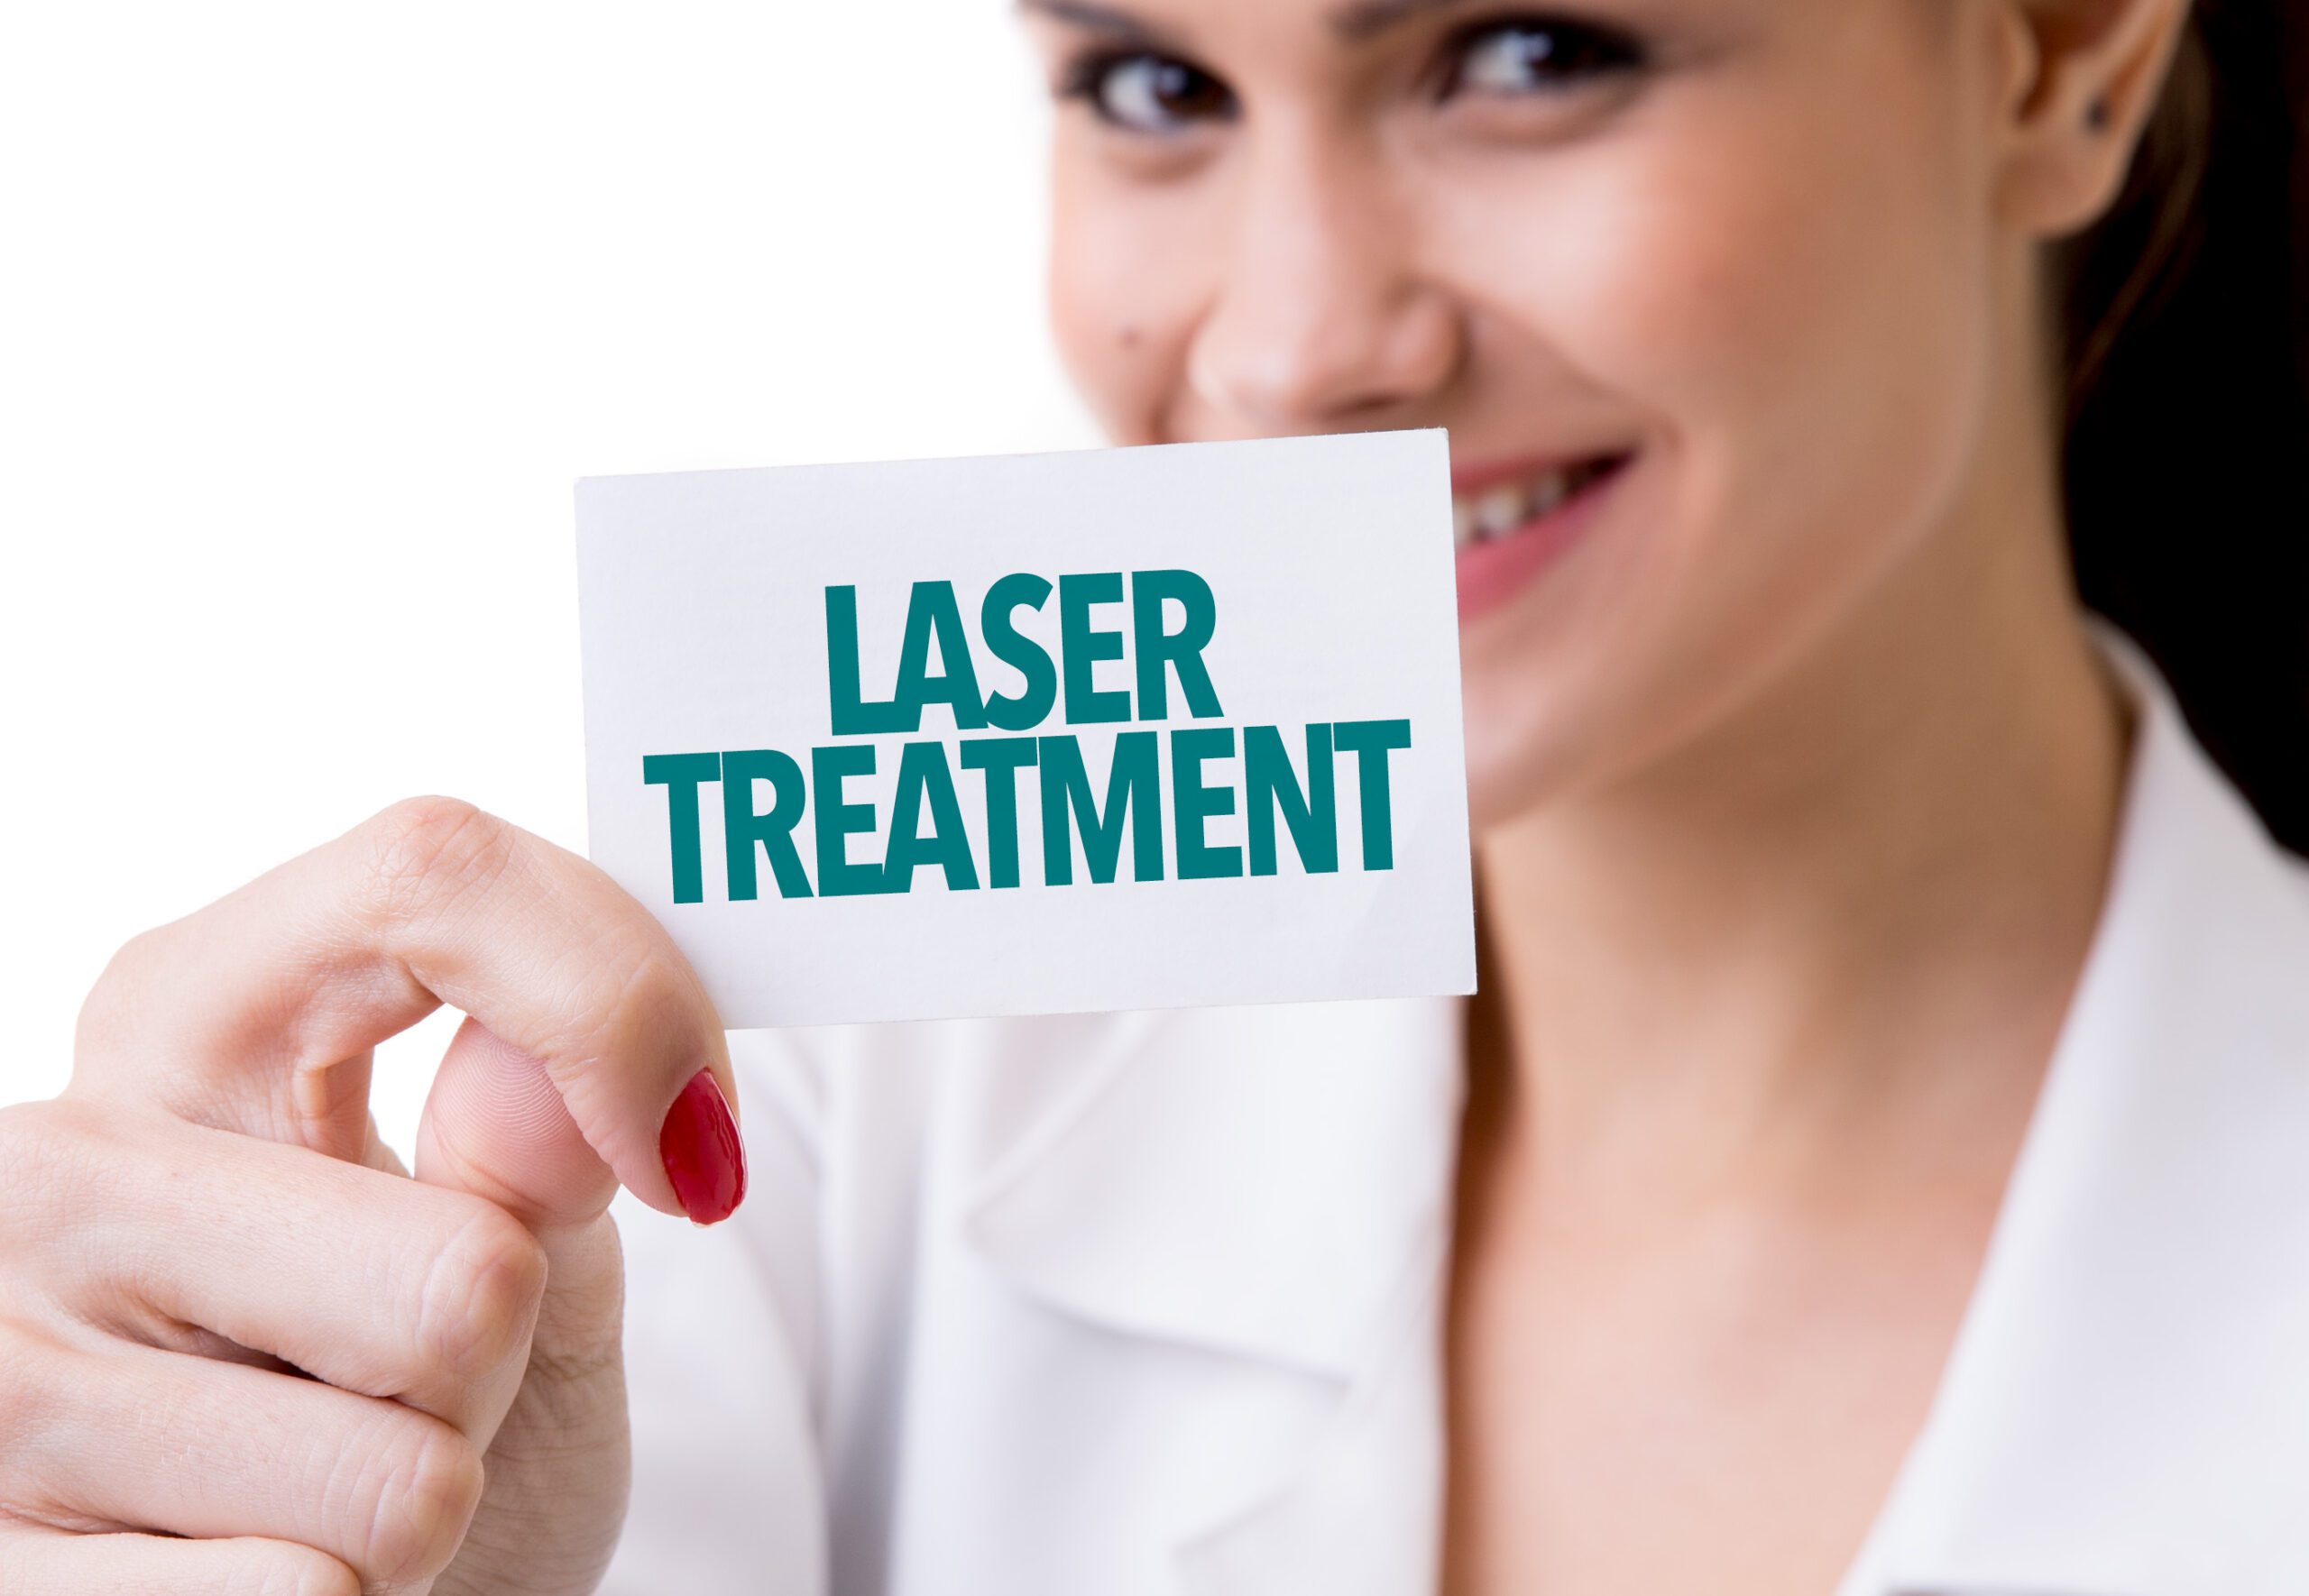 Laser Treatment sign